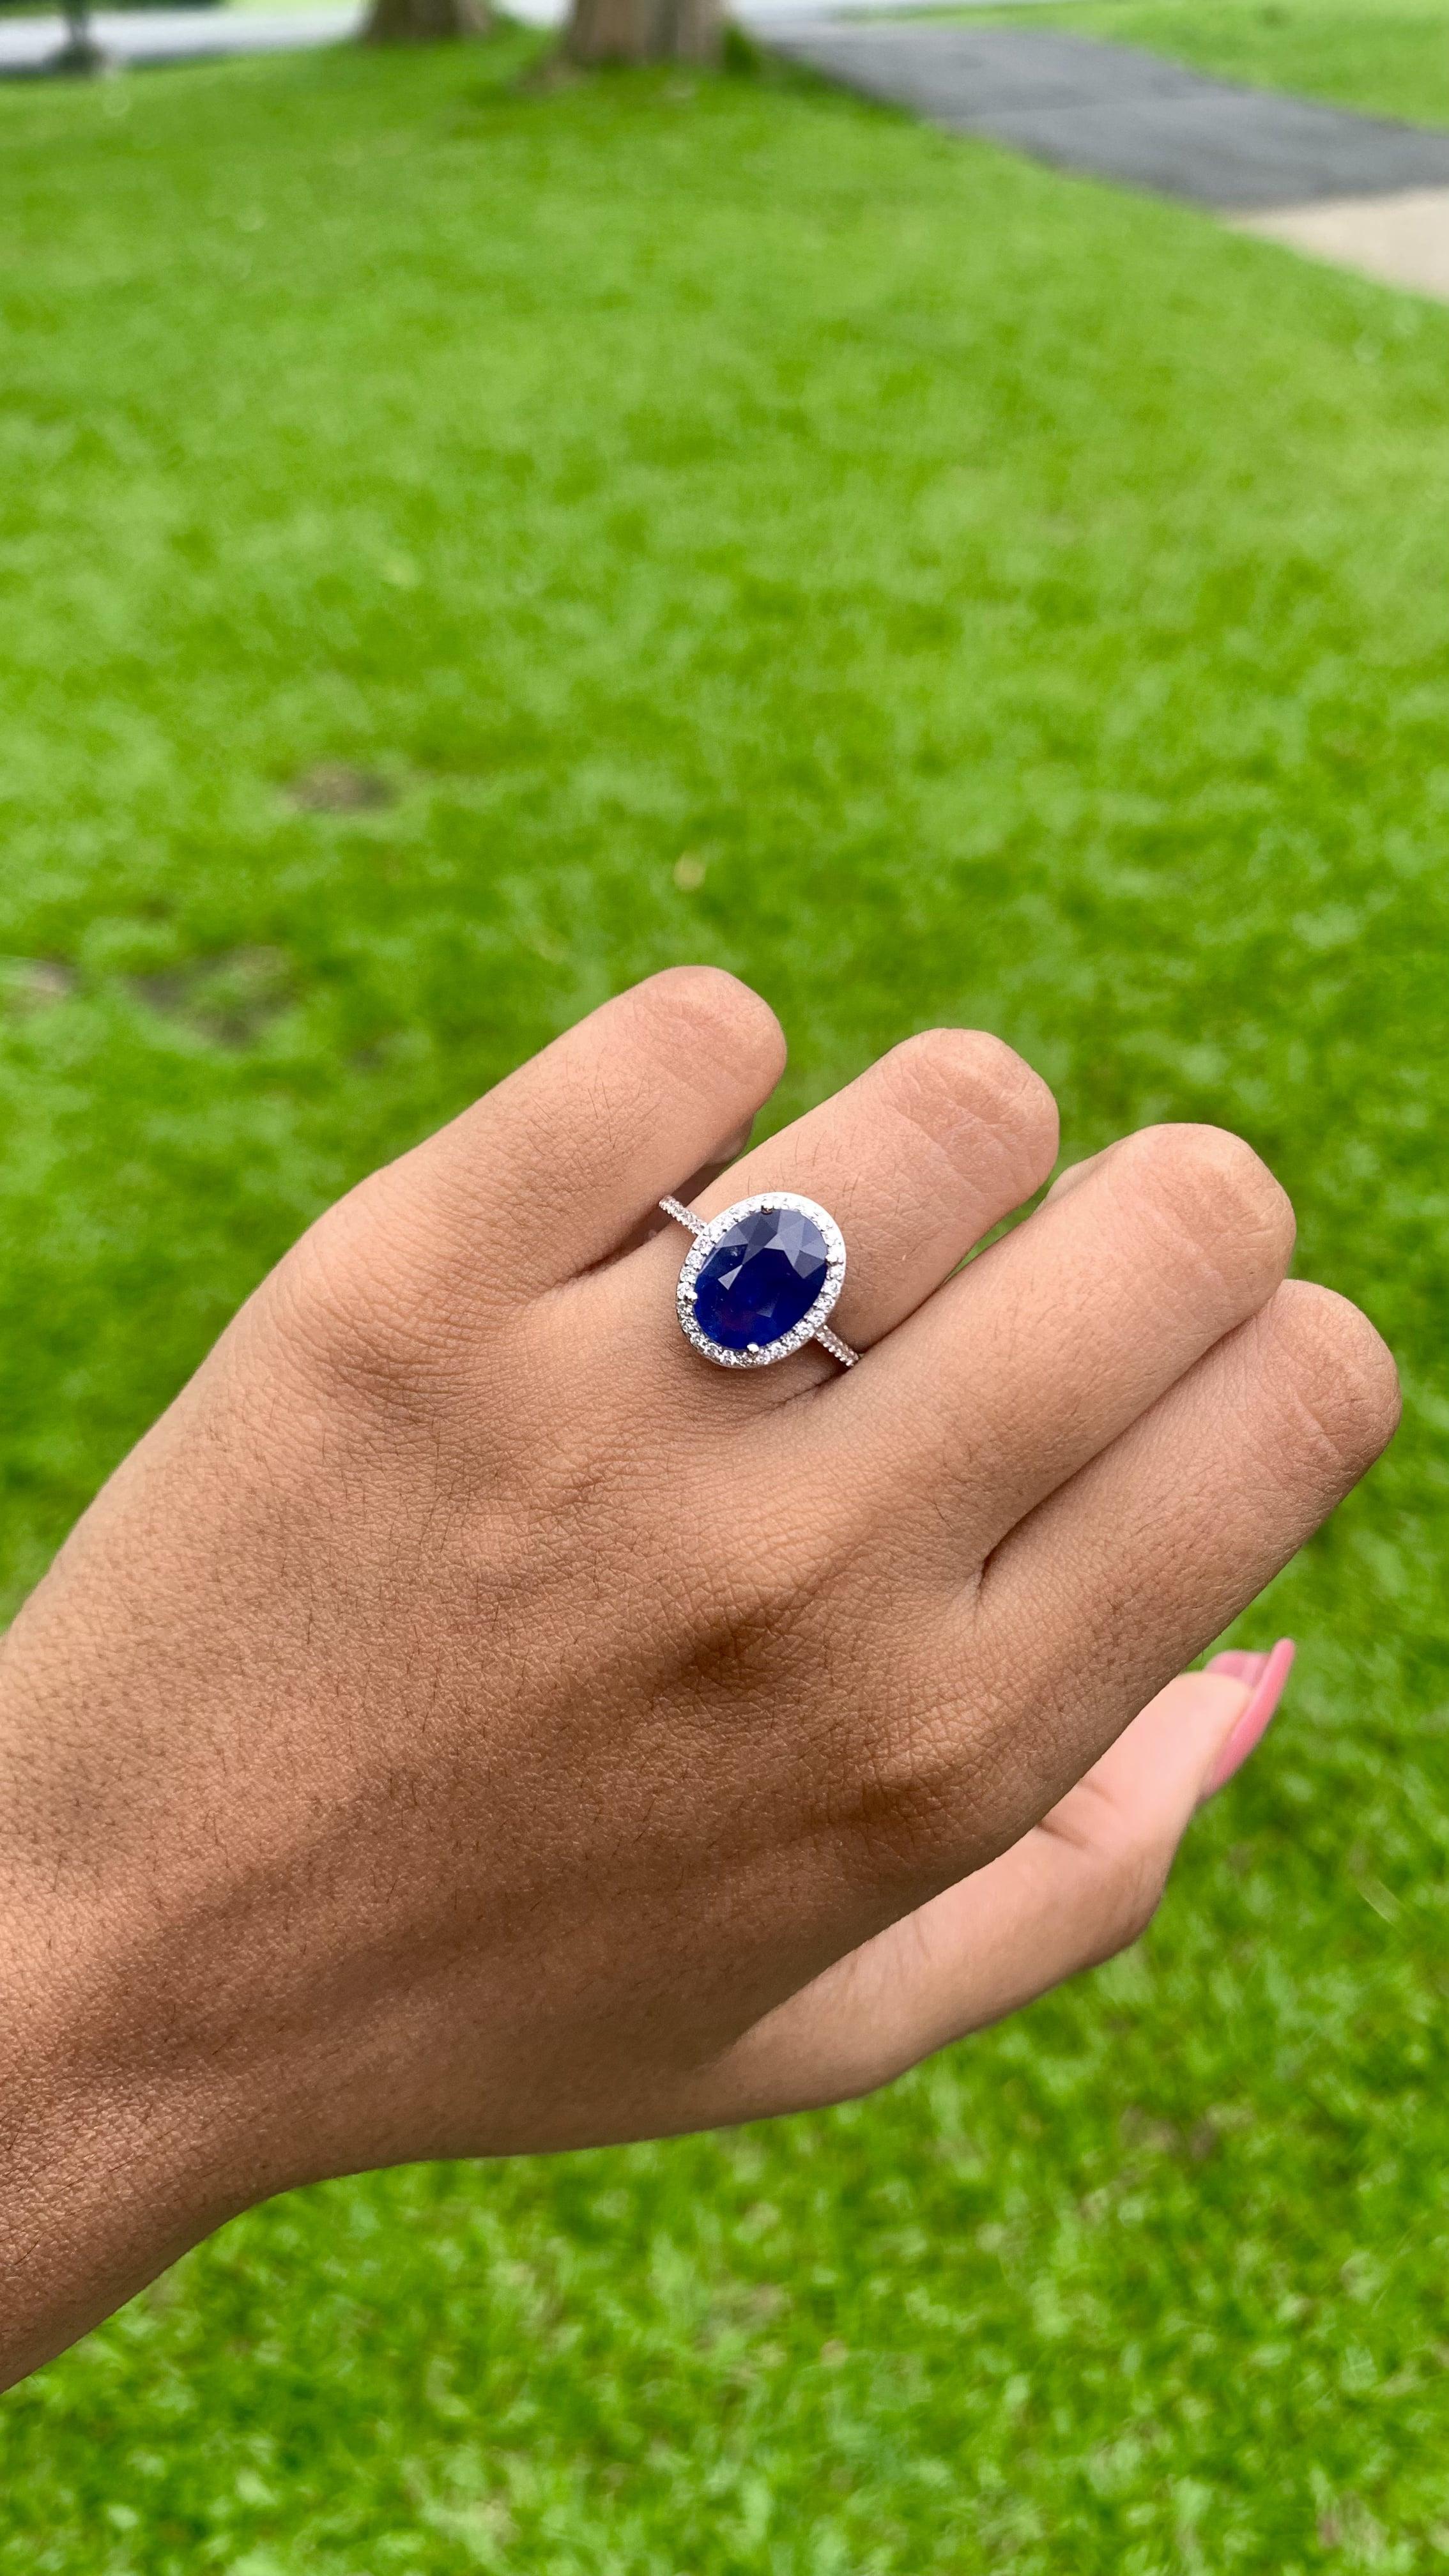 Oval Cut 3.05 Carat Ceylon Royal Blue Sapphire & Diamond Ring in 18K White Gold